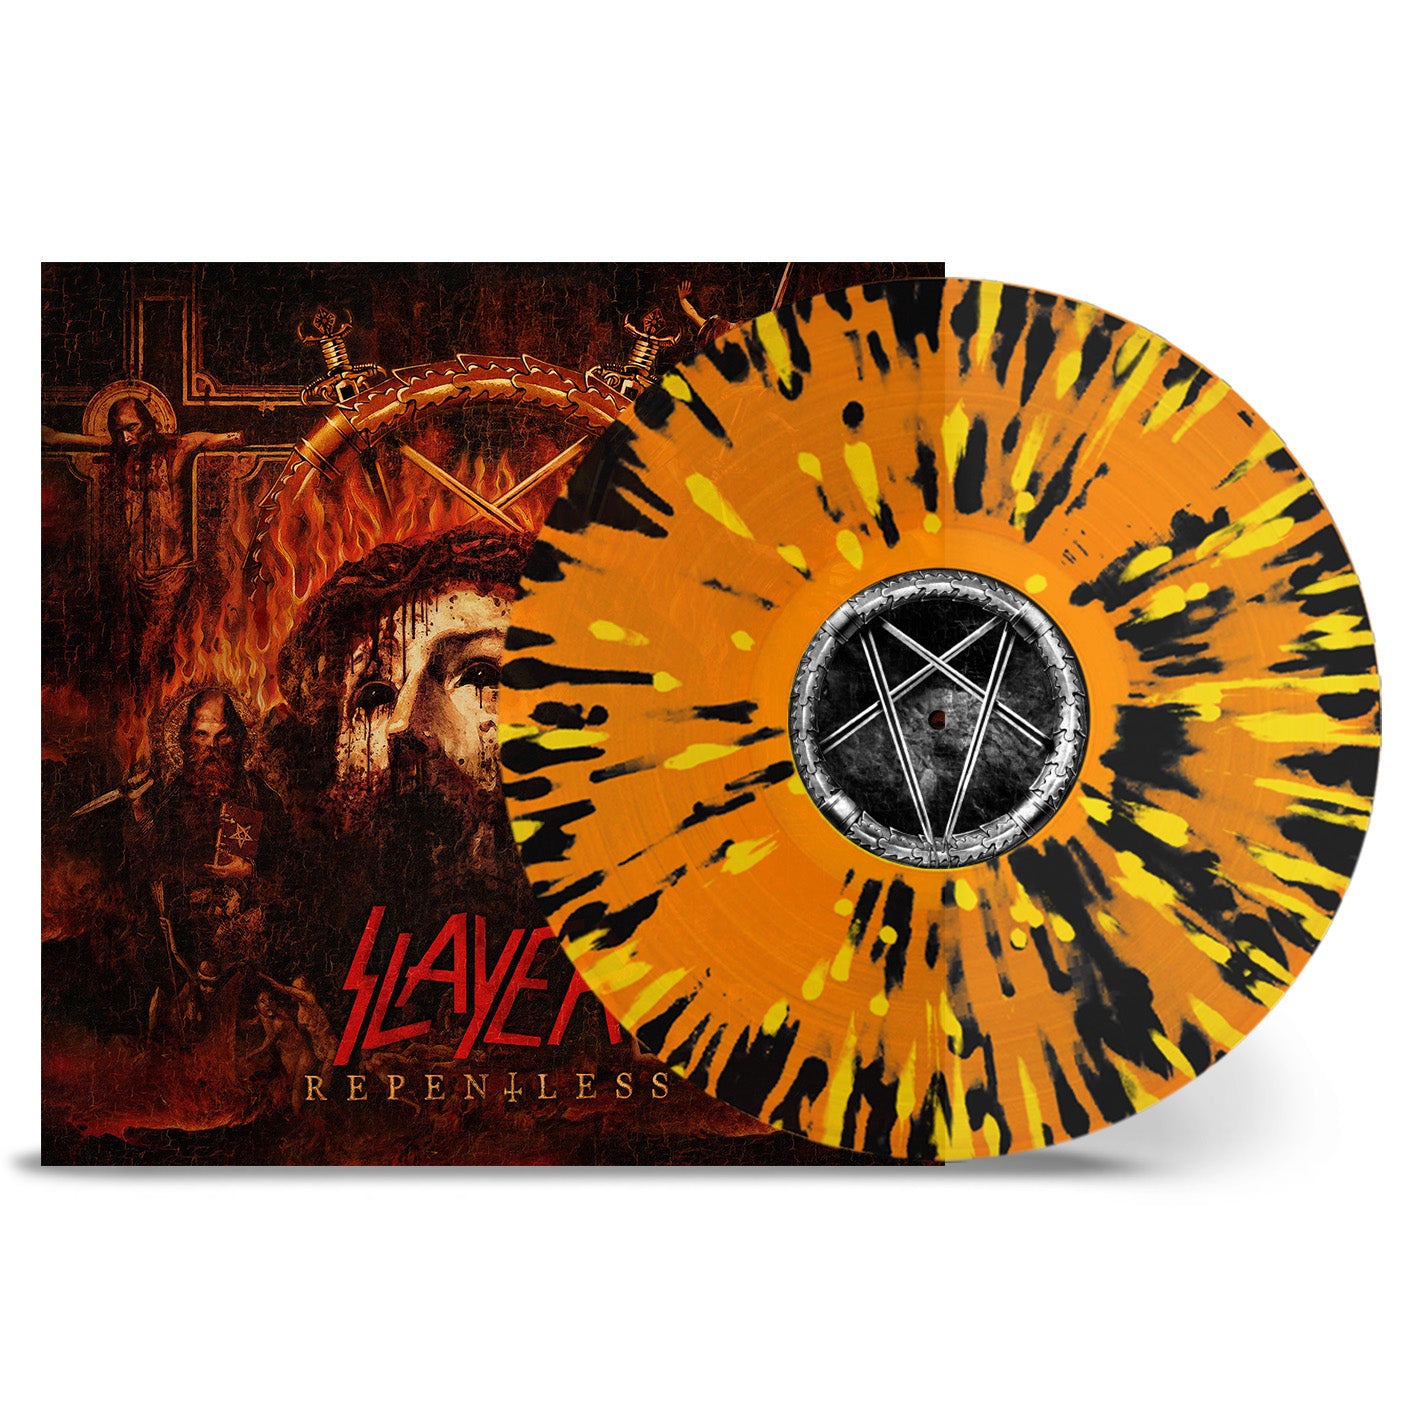 Slayer "Repentless" Transparent Orange w/ Yellow and Black Splatter Vinyl - PRE-ORDER